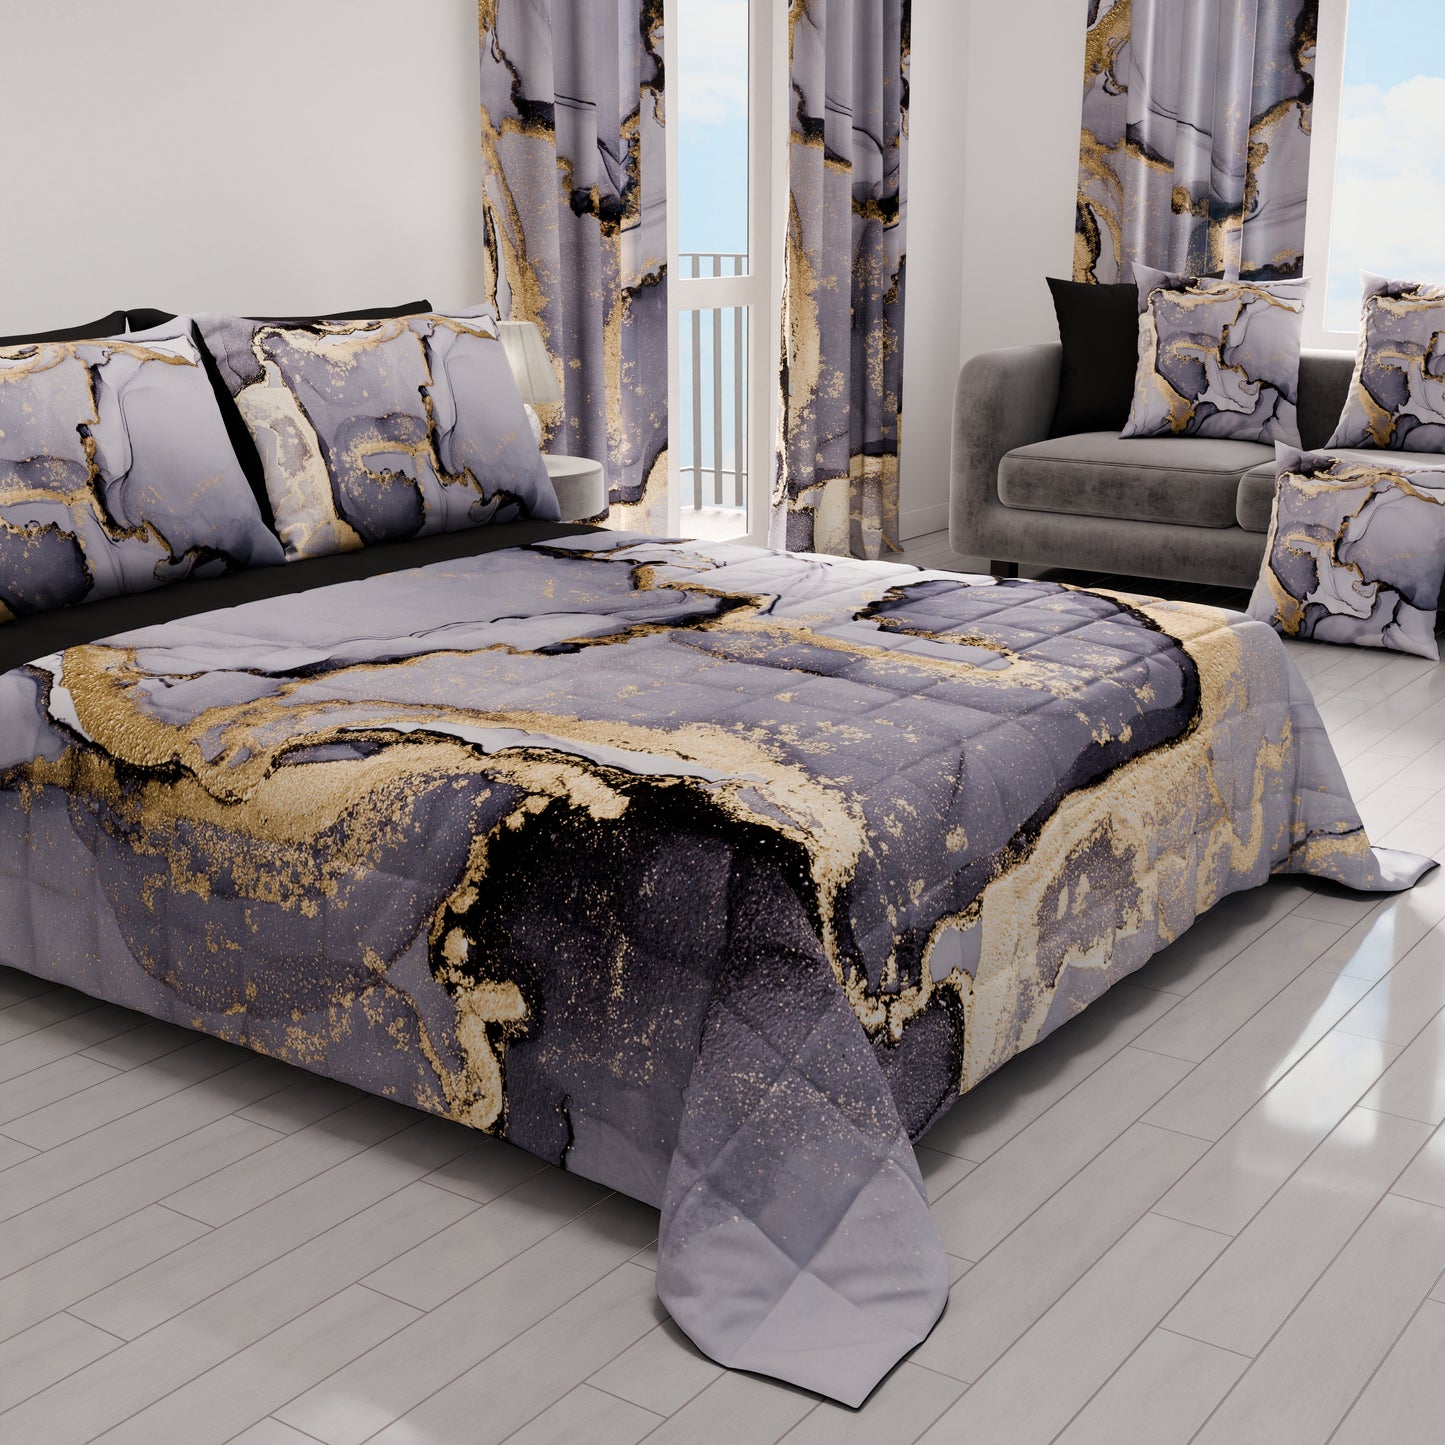 Spring Autumn Quilt Bedspread in Dark Gray Marble Digital Print